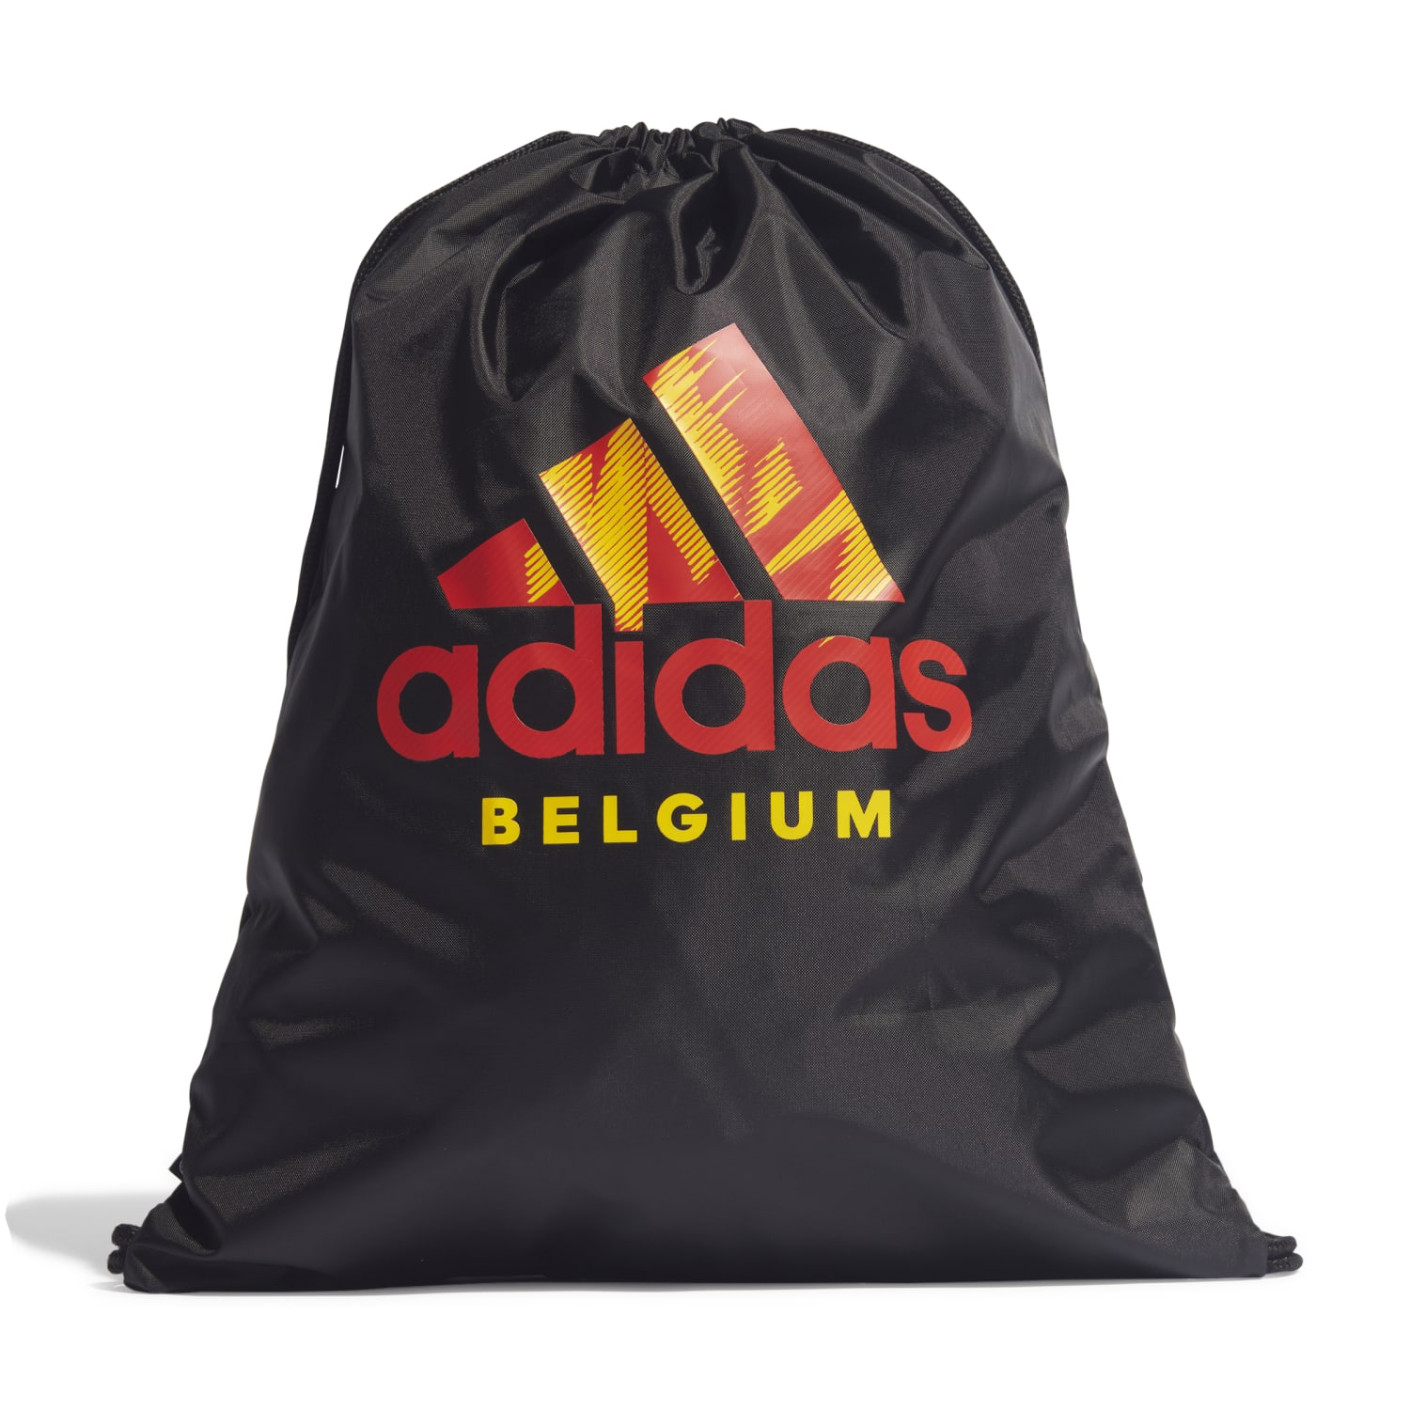 adidas Belgique Sac de Sport Noir Rouge Jaune